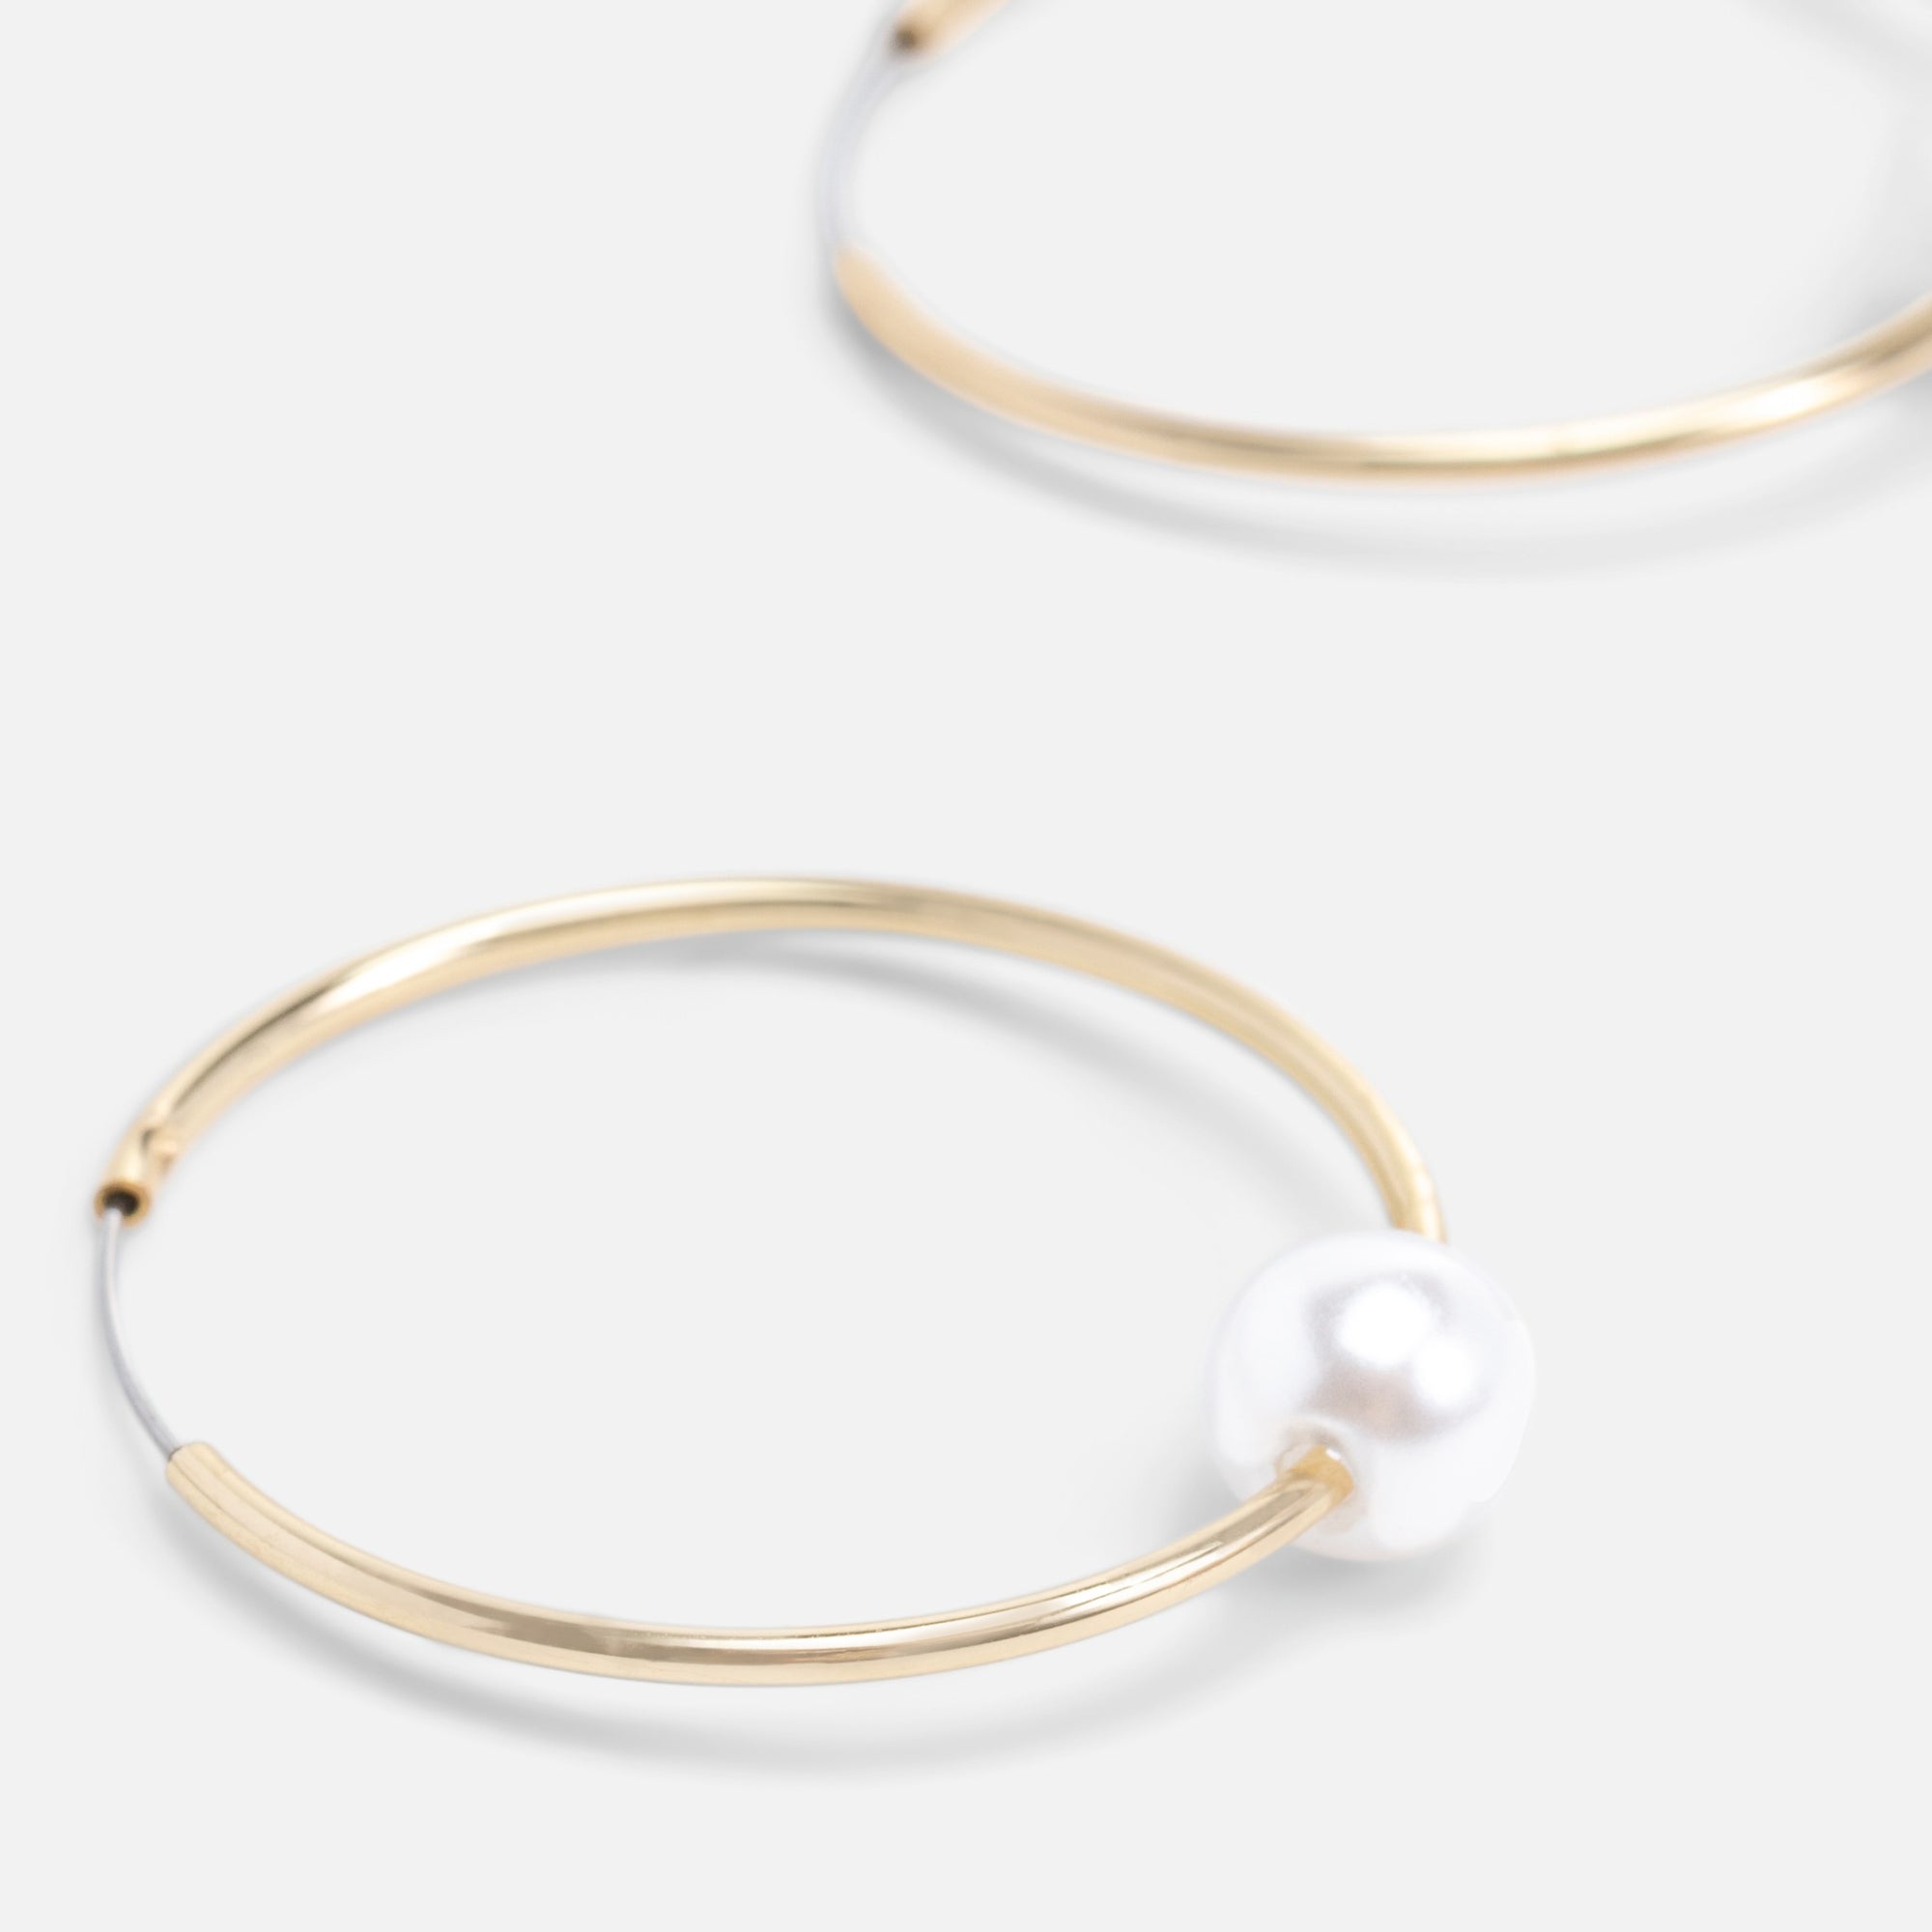 Golden hoop earrings with pearl insert